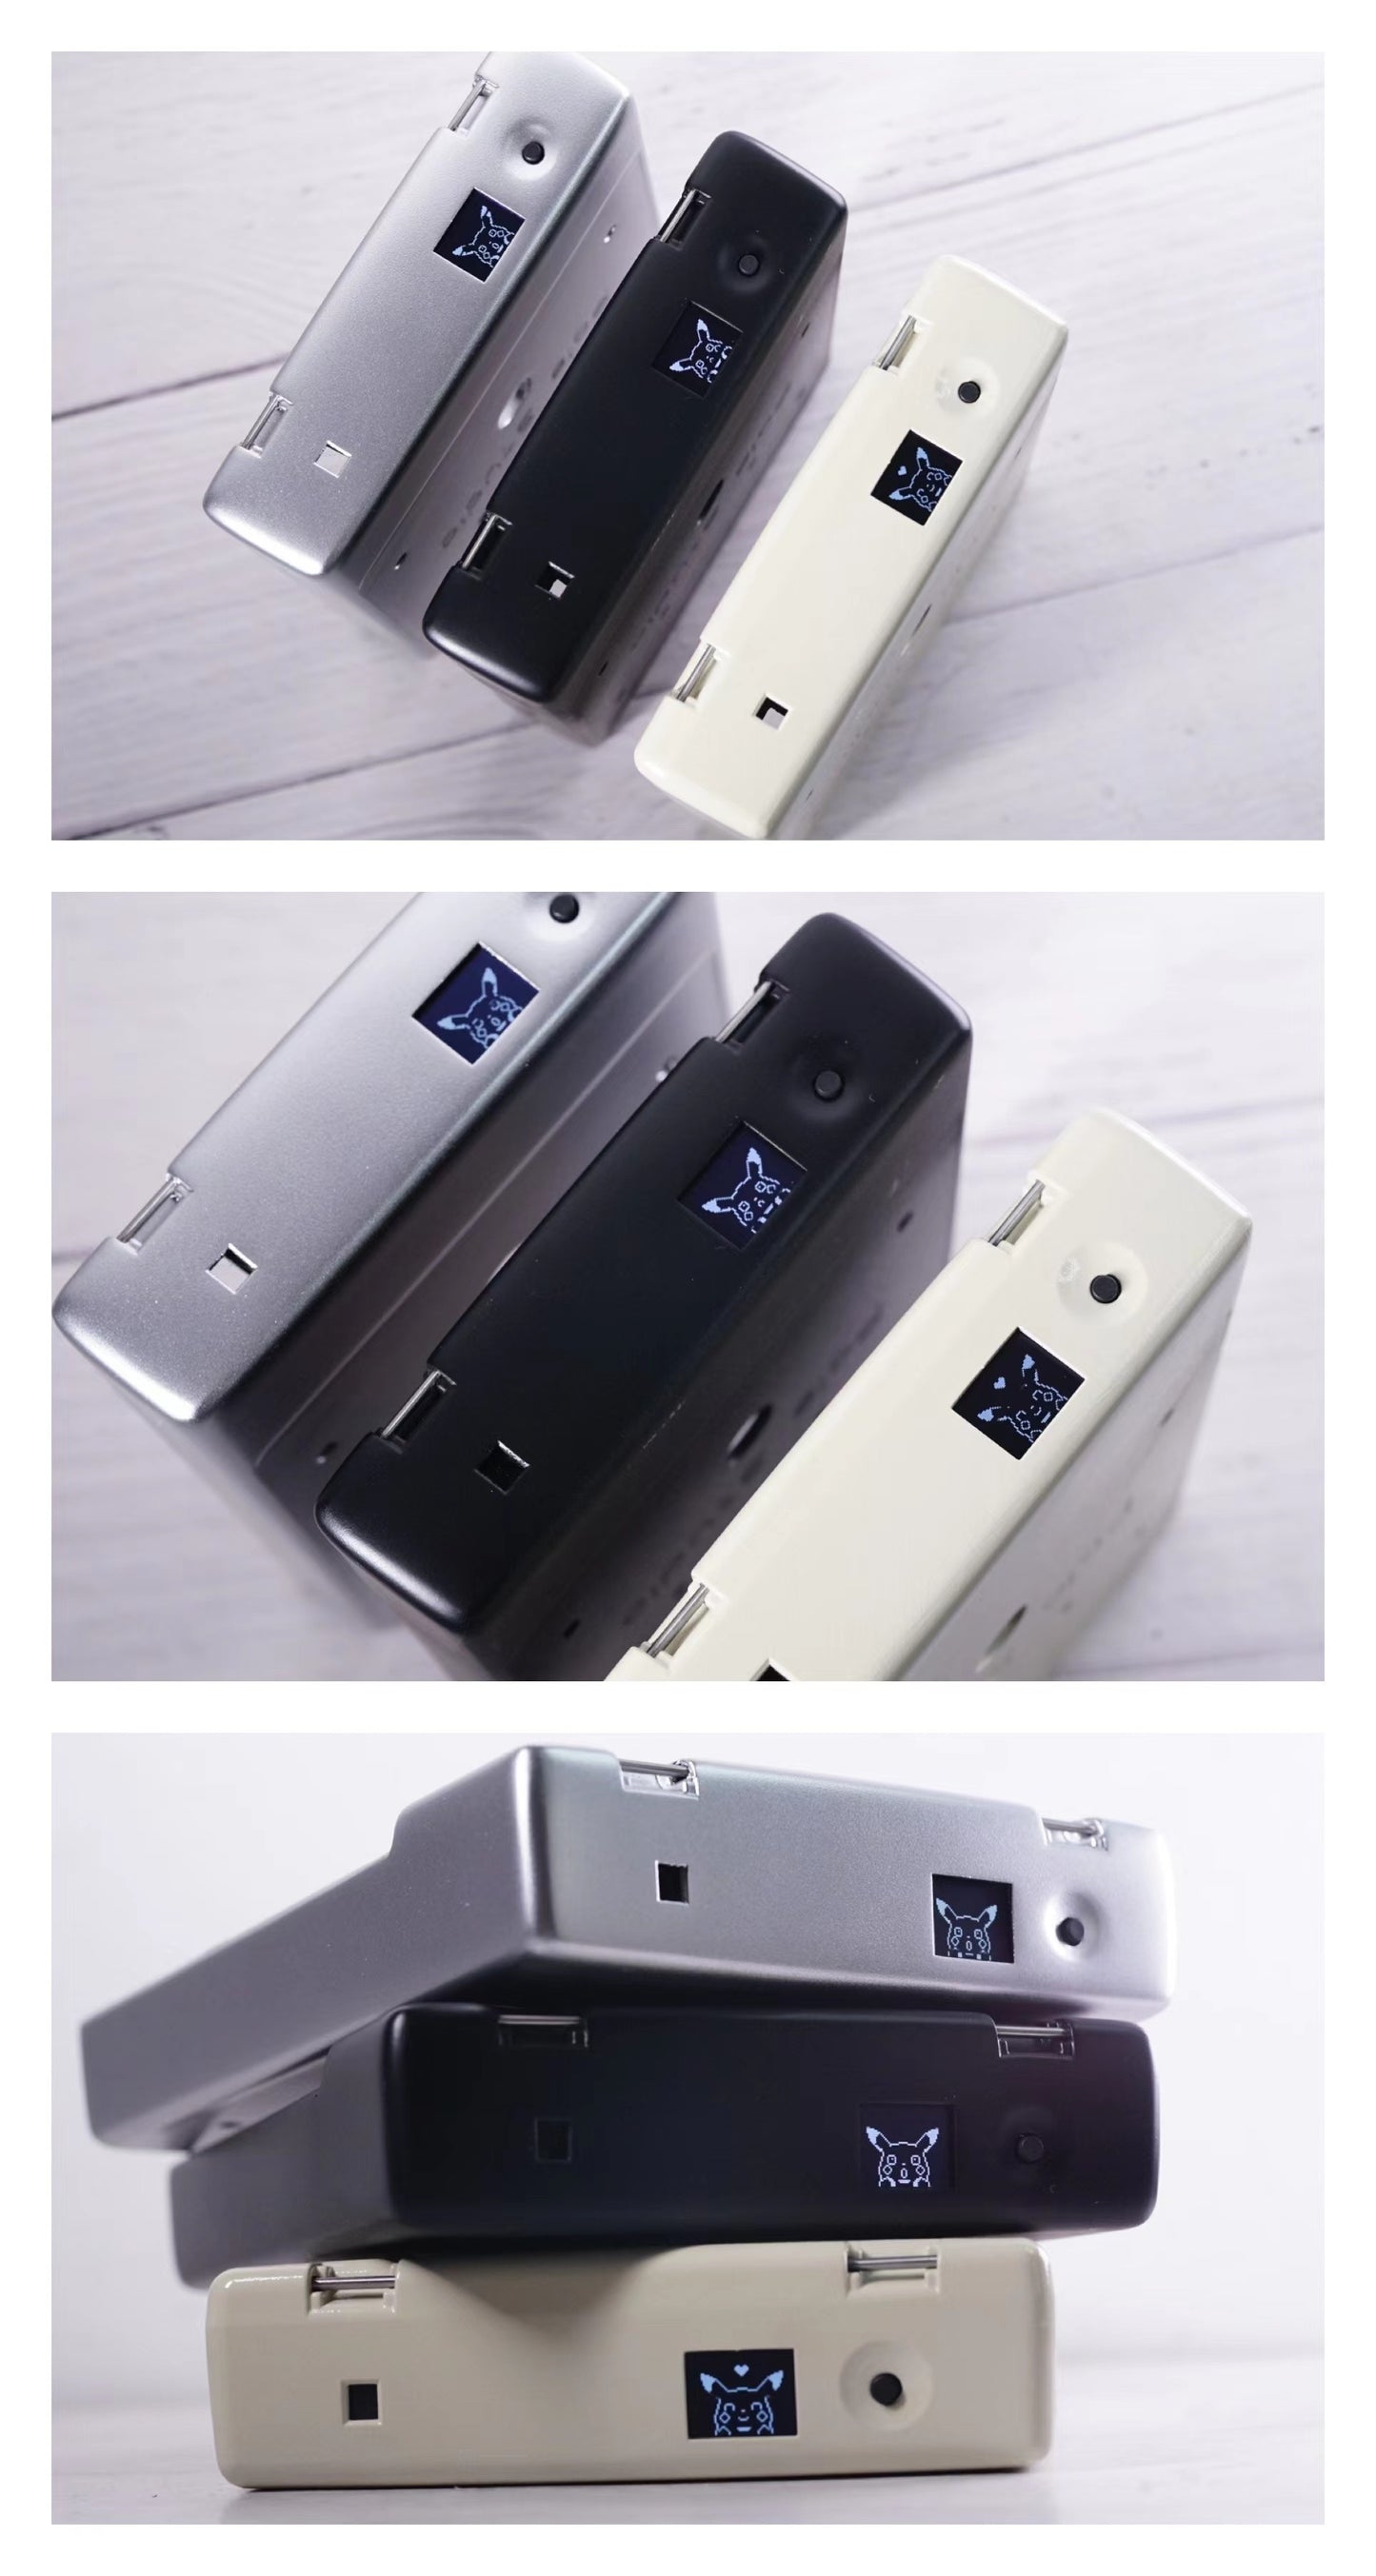 Pola Studio*Polaroid camera Power KIT adapter EVO ver OLED SCREEN SX70/SONAR/680/690